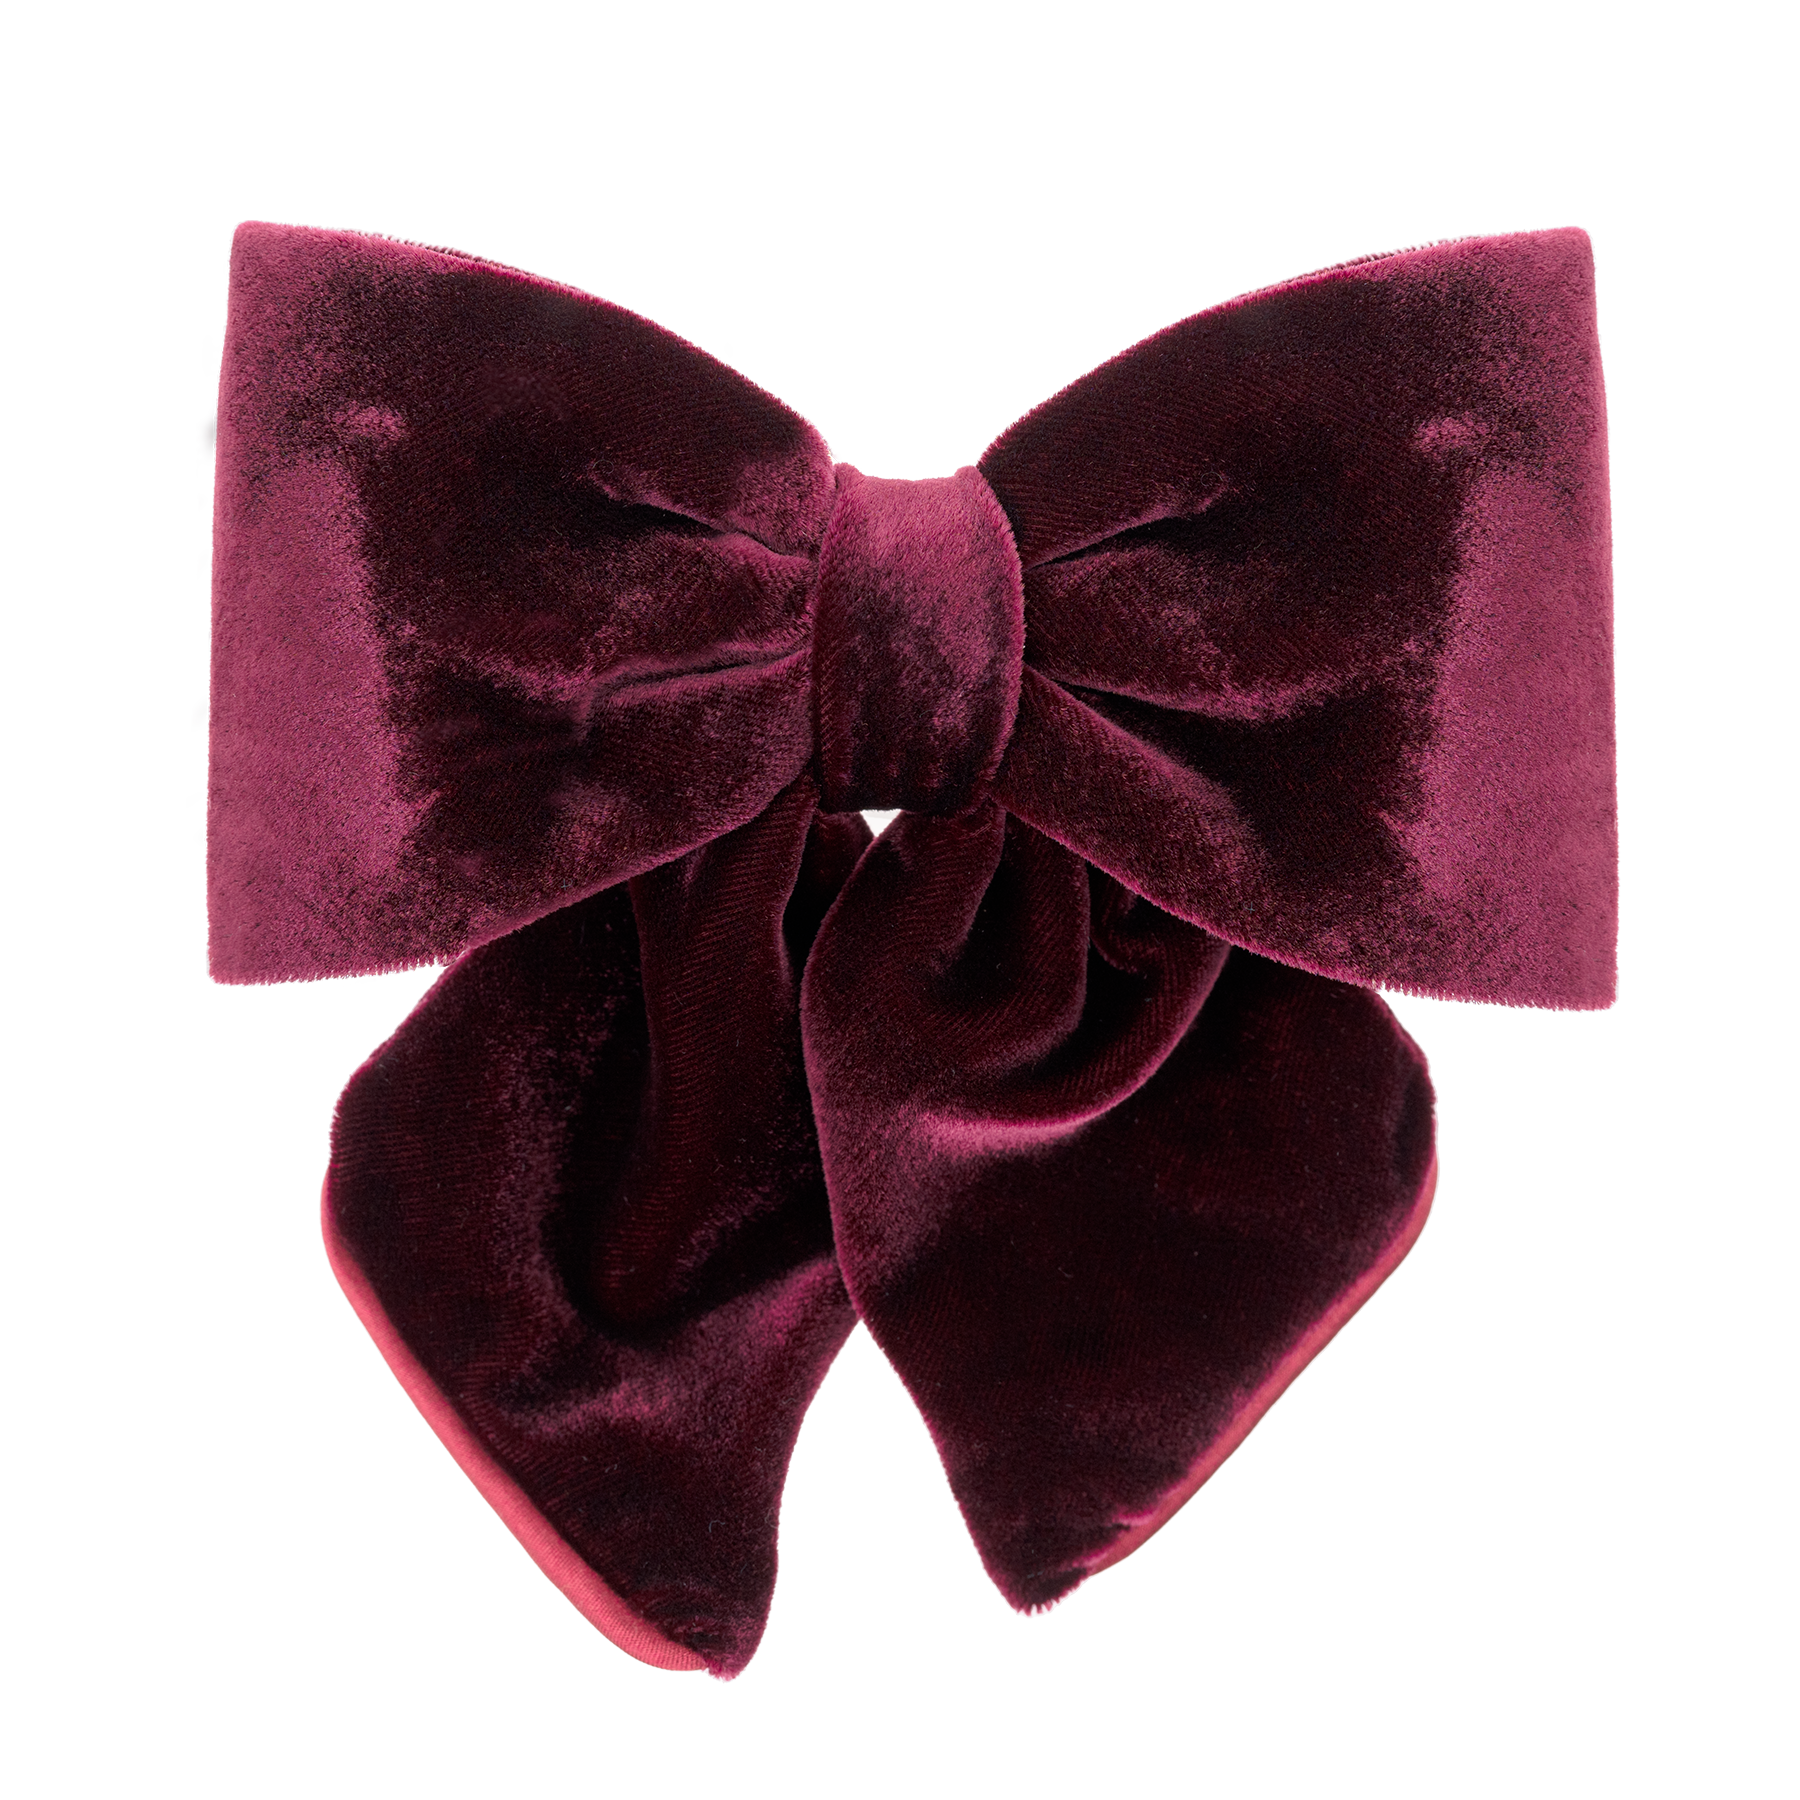 Luxury Dark Red Velvet Bow Tie